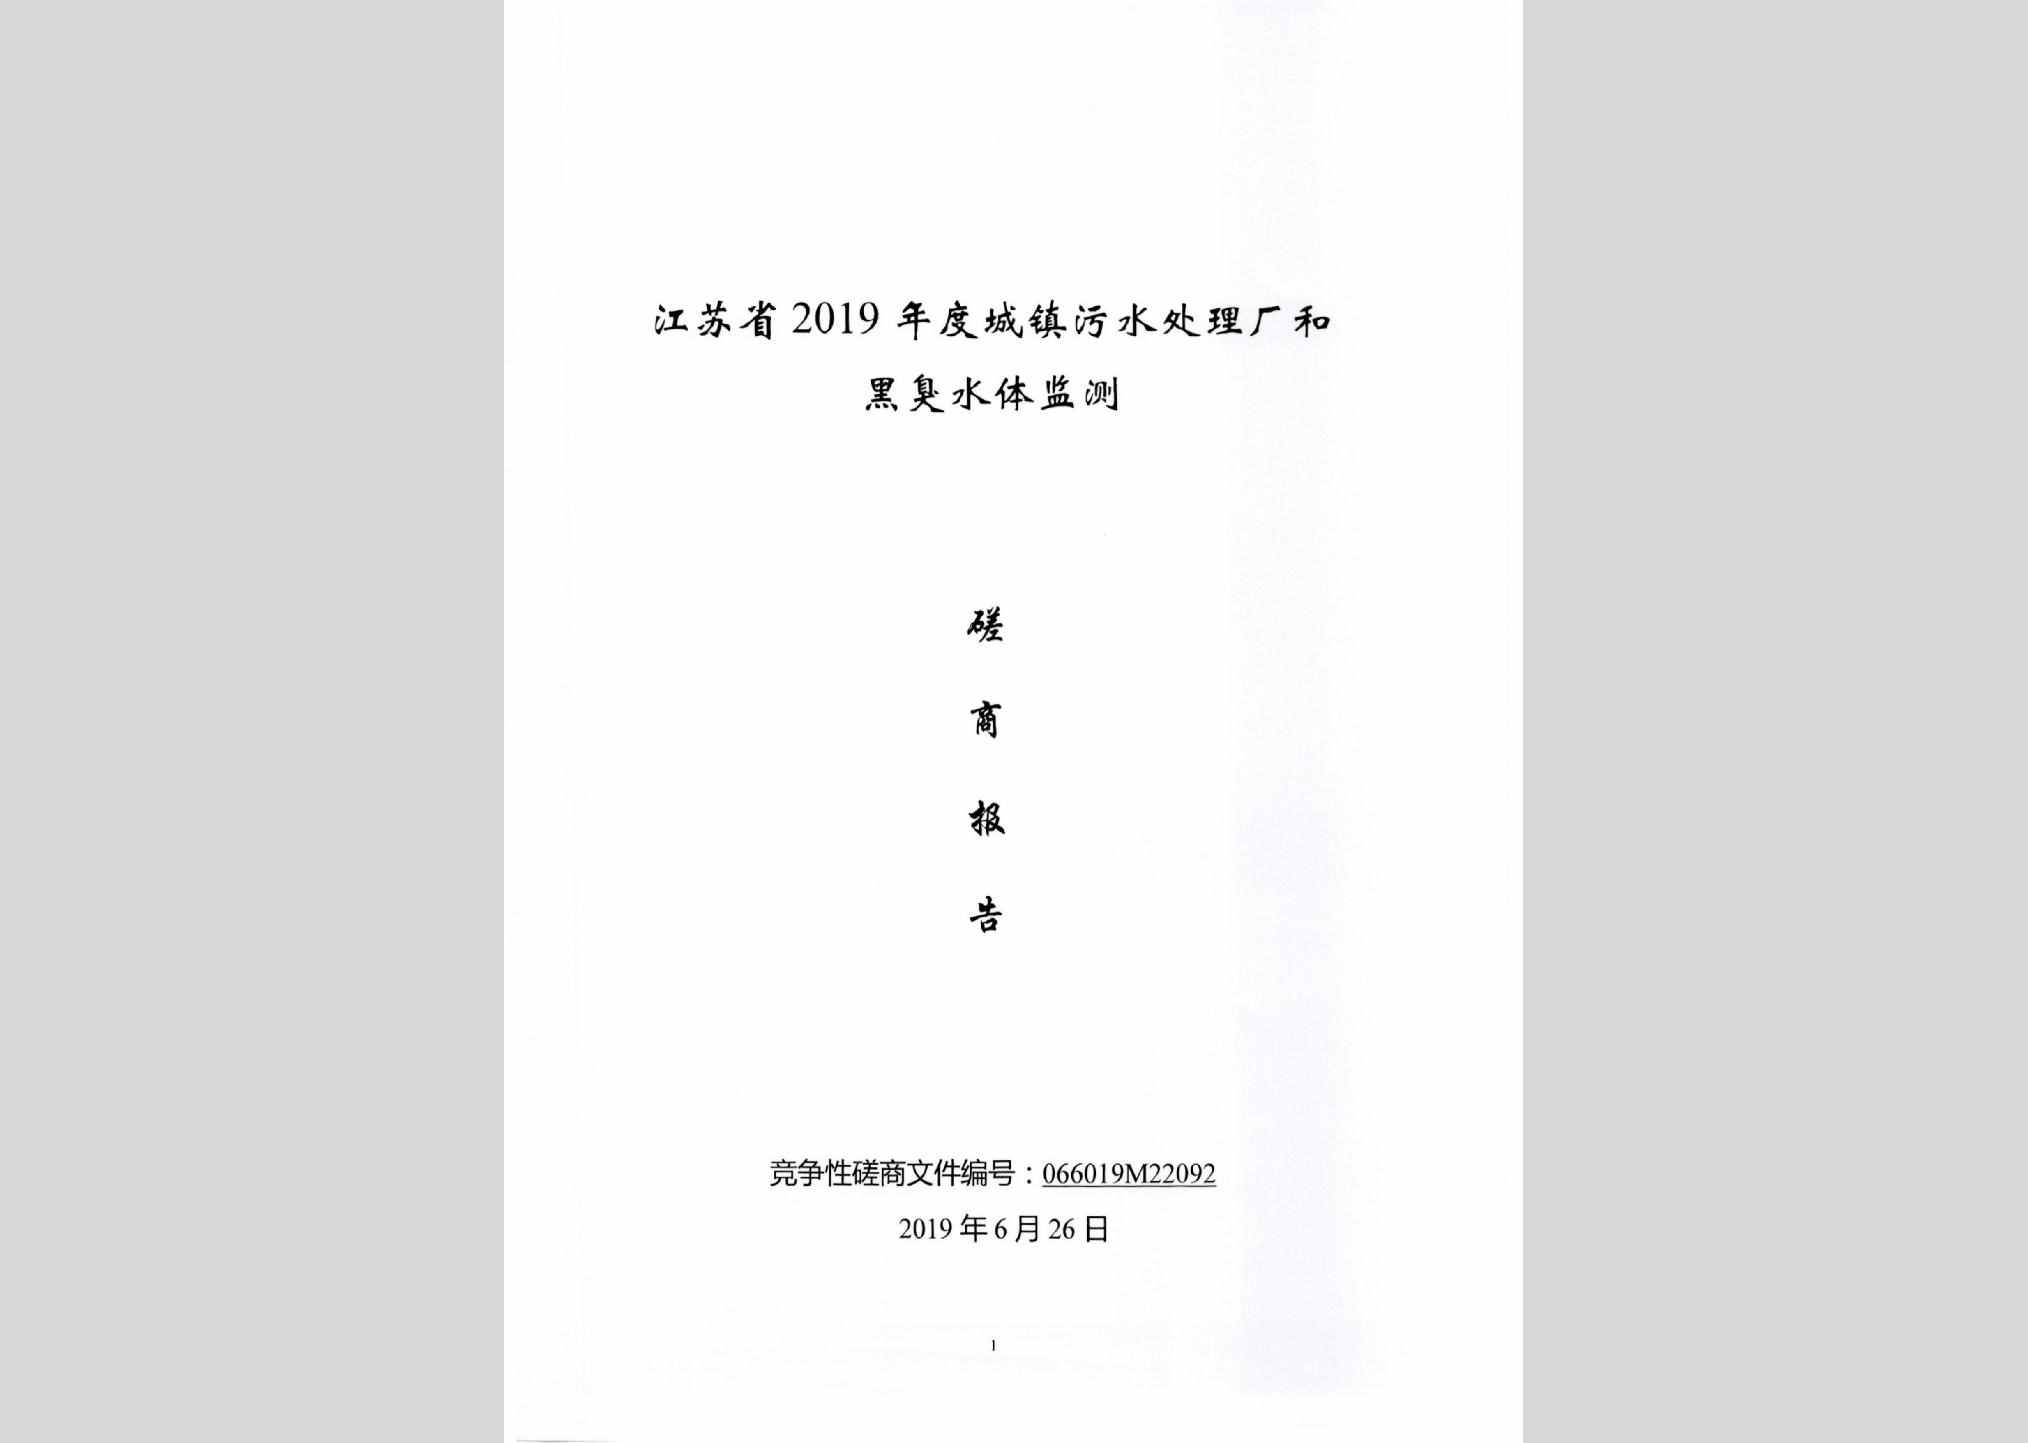 JS-WSCLCHHC-2019：江苏省2019年度城镇污水处理厂和黑臭水体监测磋商报告